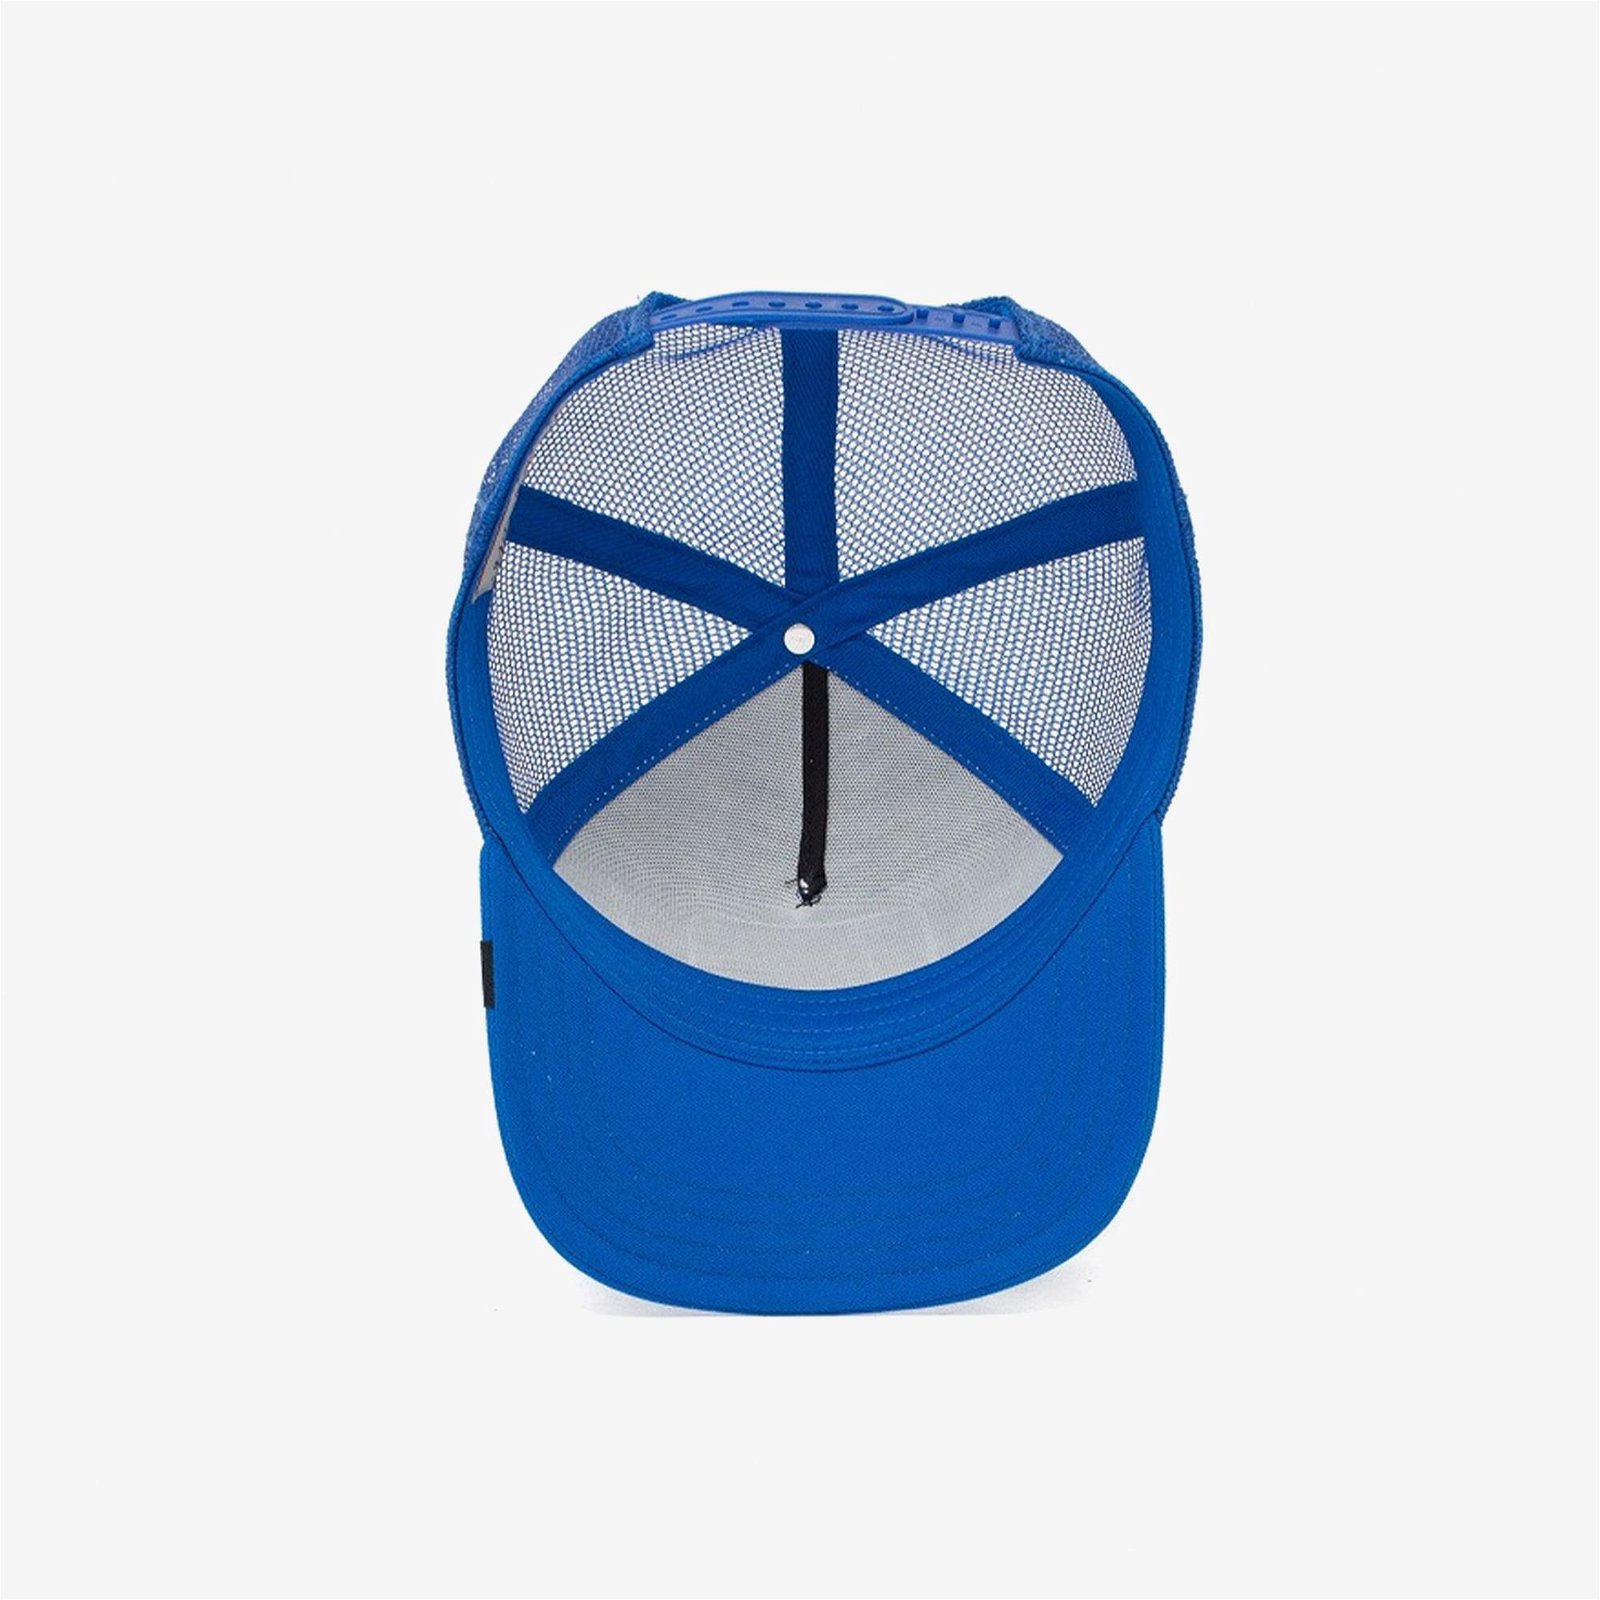 Goorin Bros Freedom Eagle Kartal Figürlü Unisex Mavi  Şapka